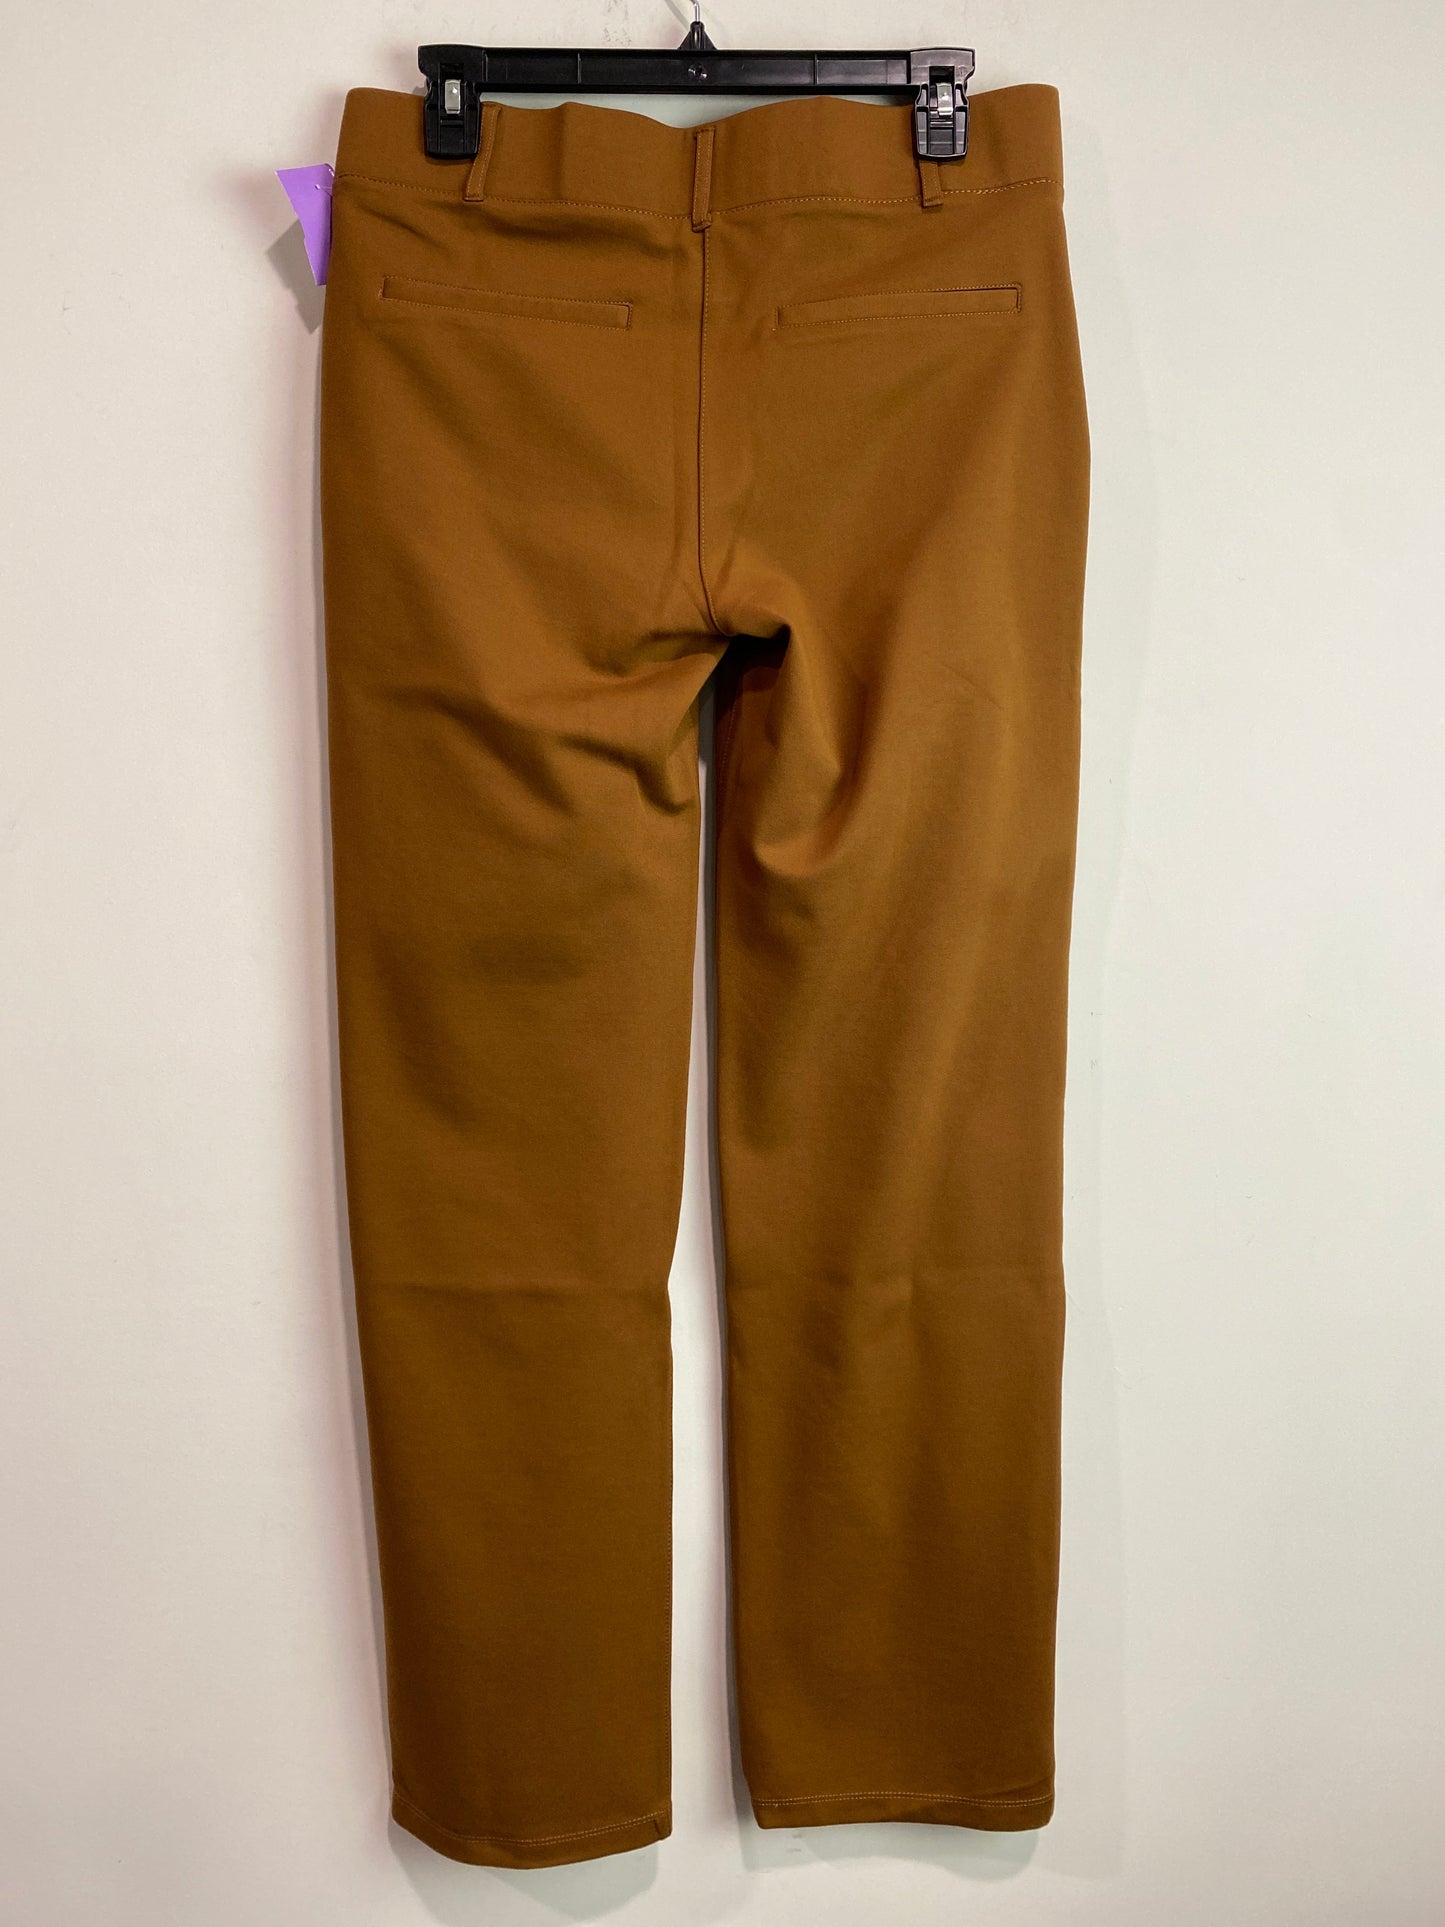 Brown Pants Dress Betabrand, Size L